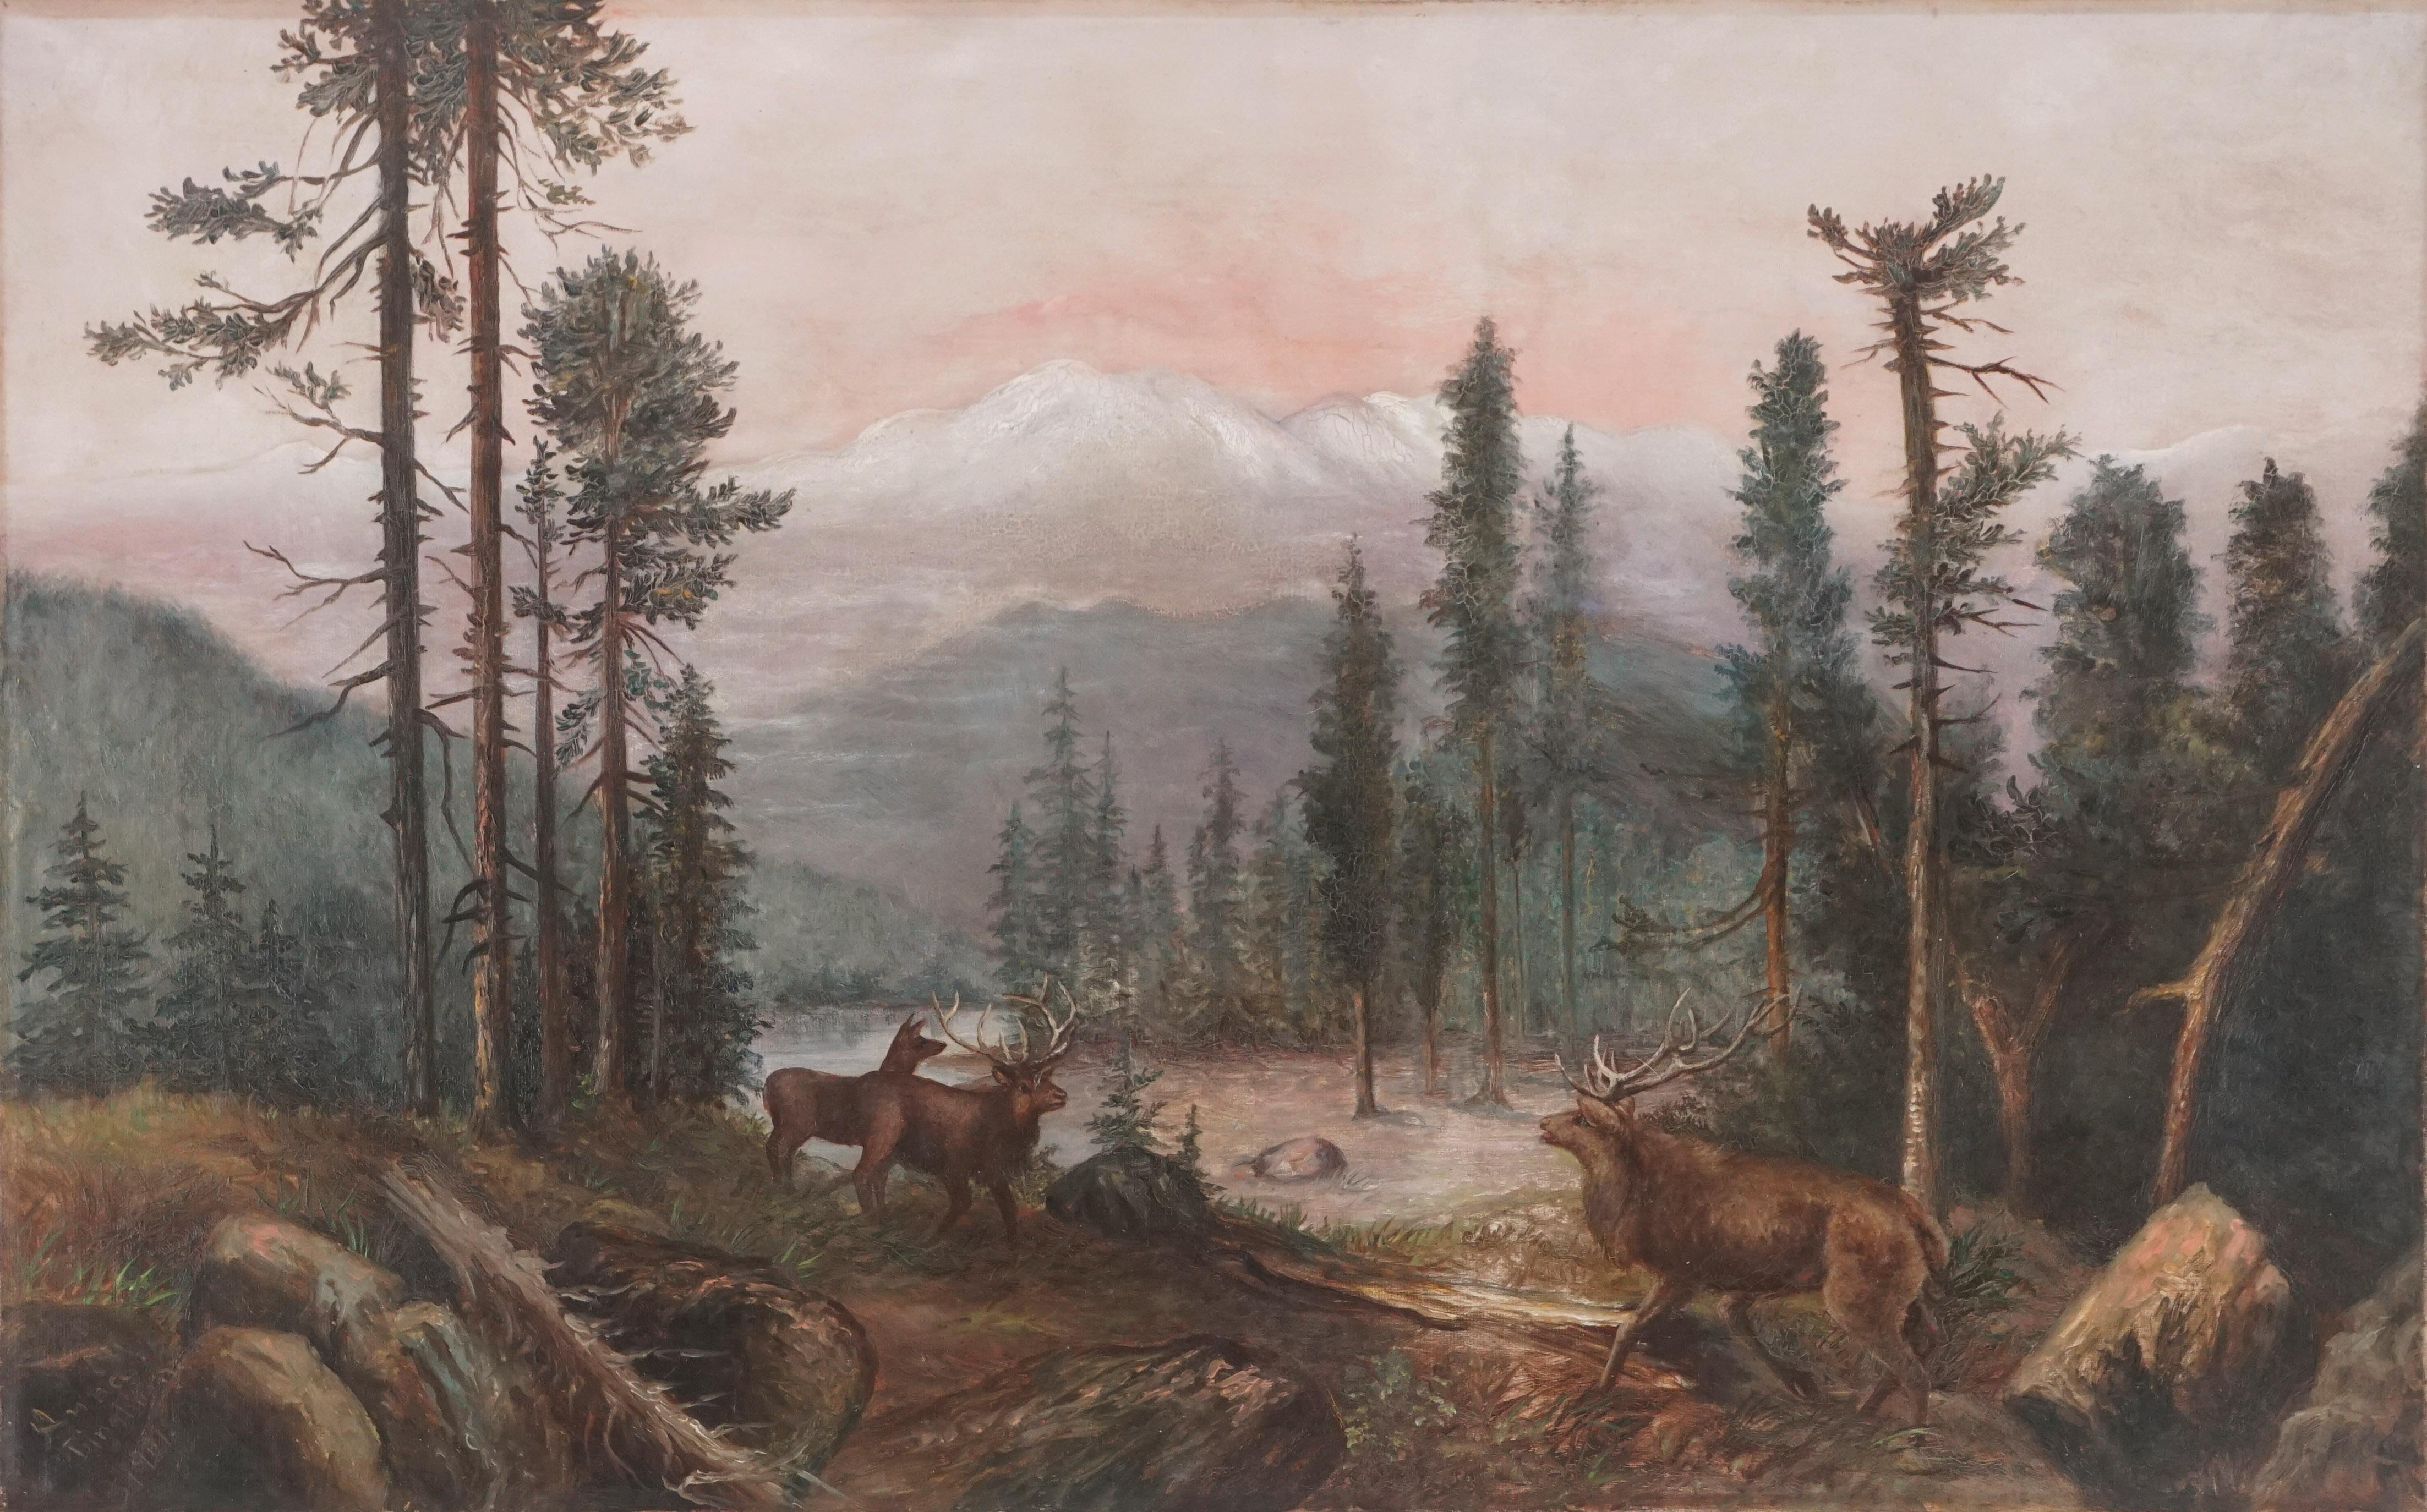 Turn of 20th Century Mt. Shasta Landscape with Deer